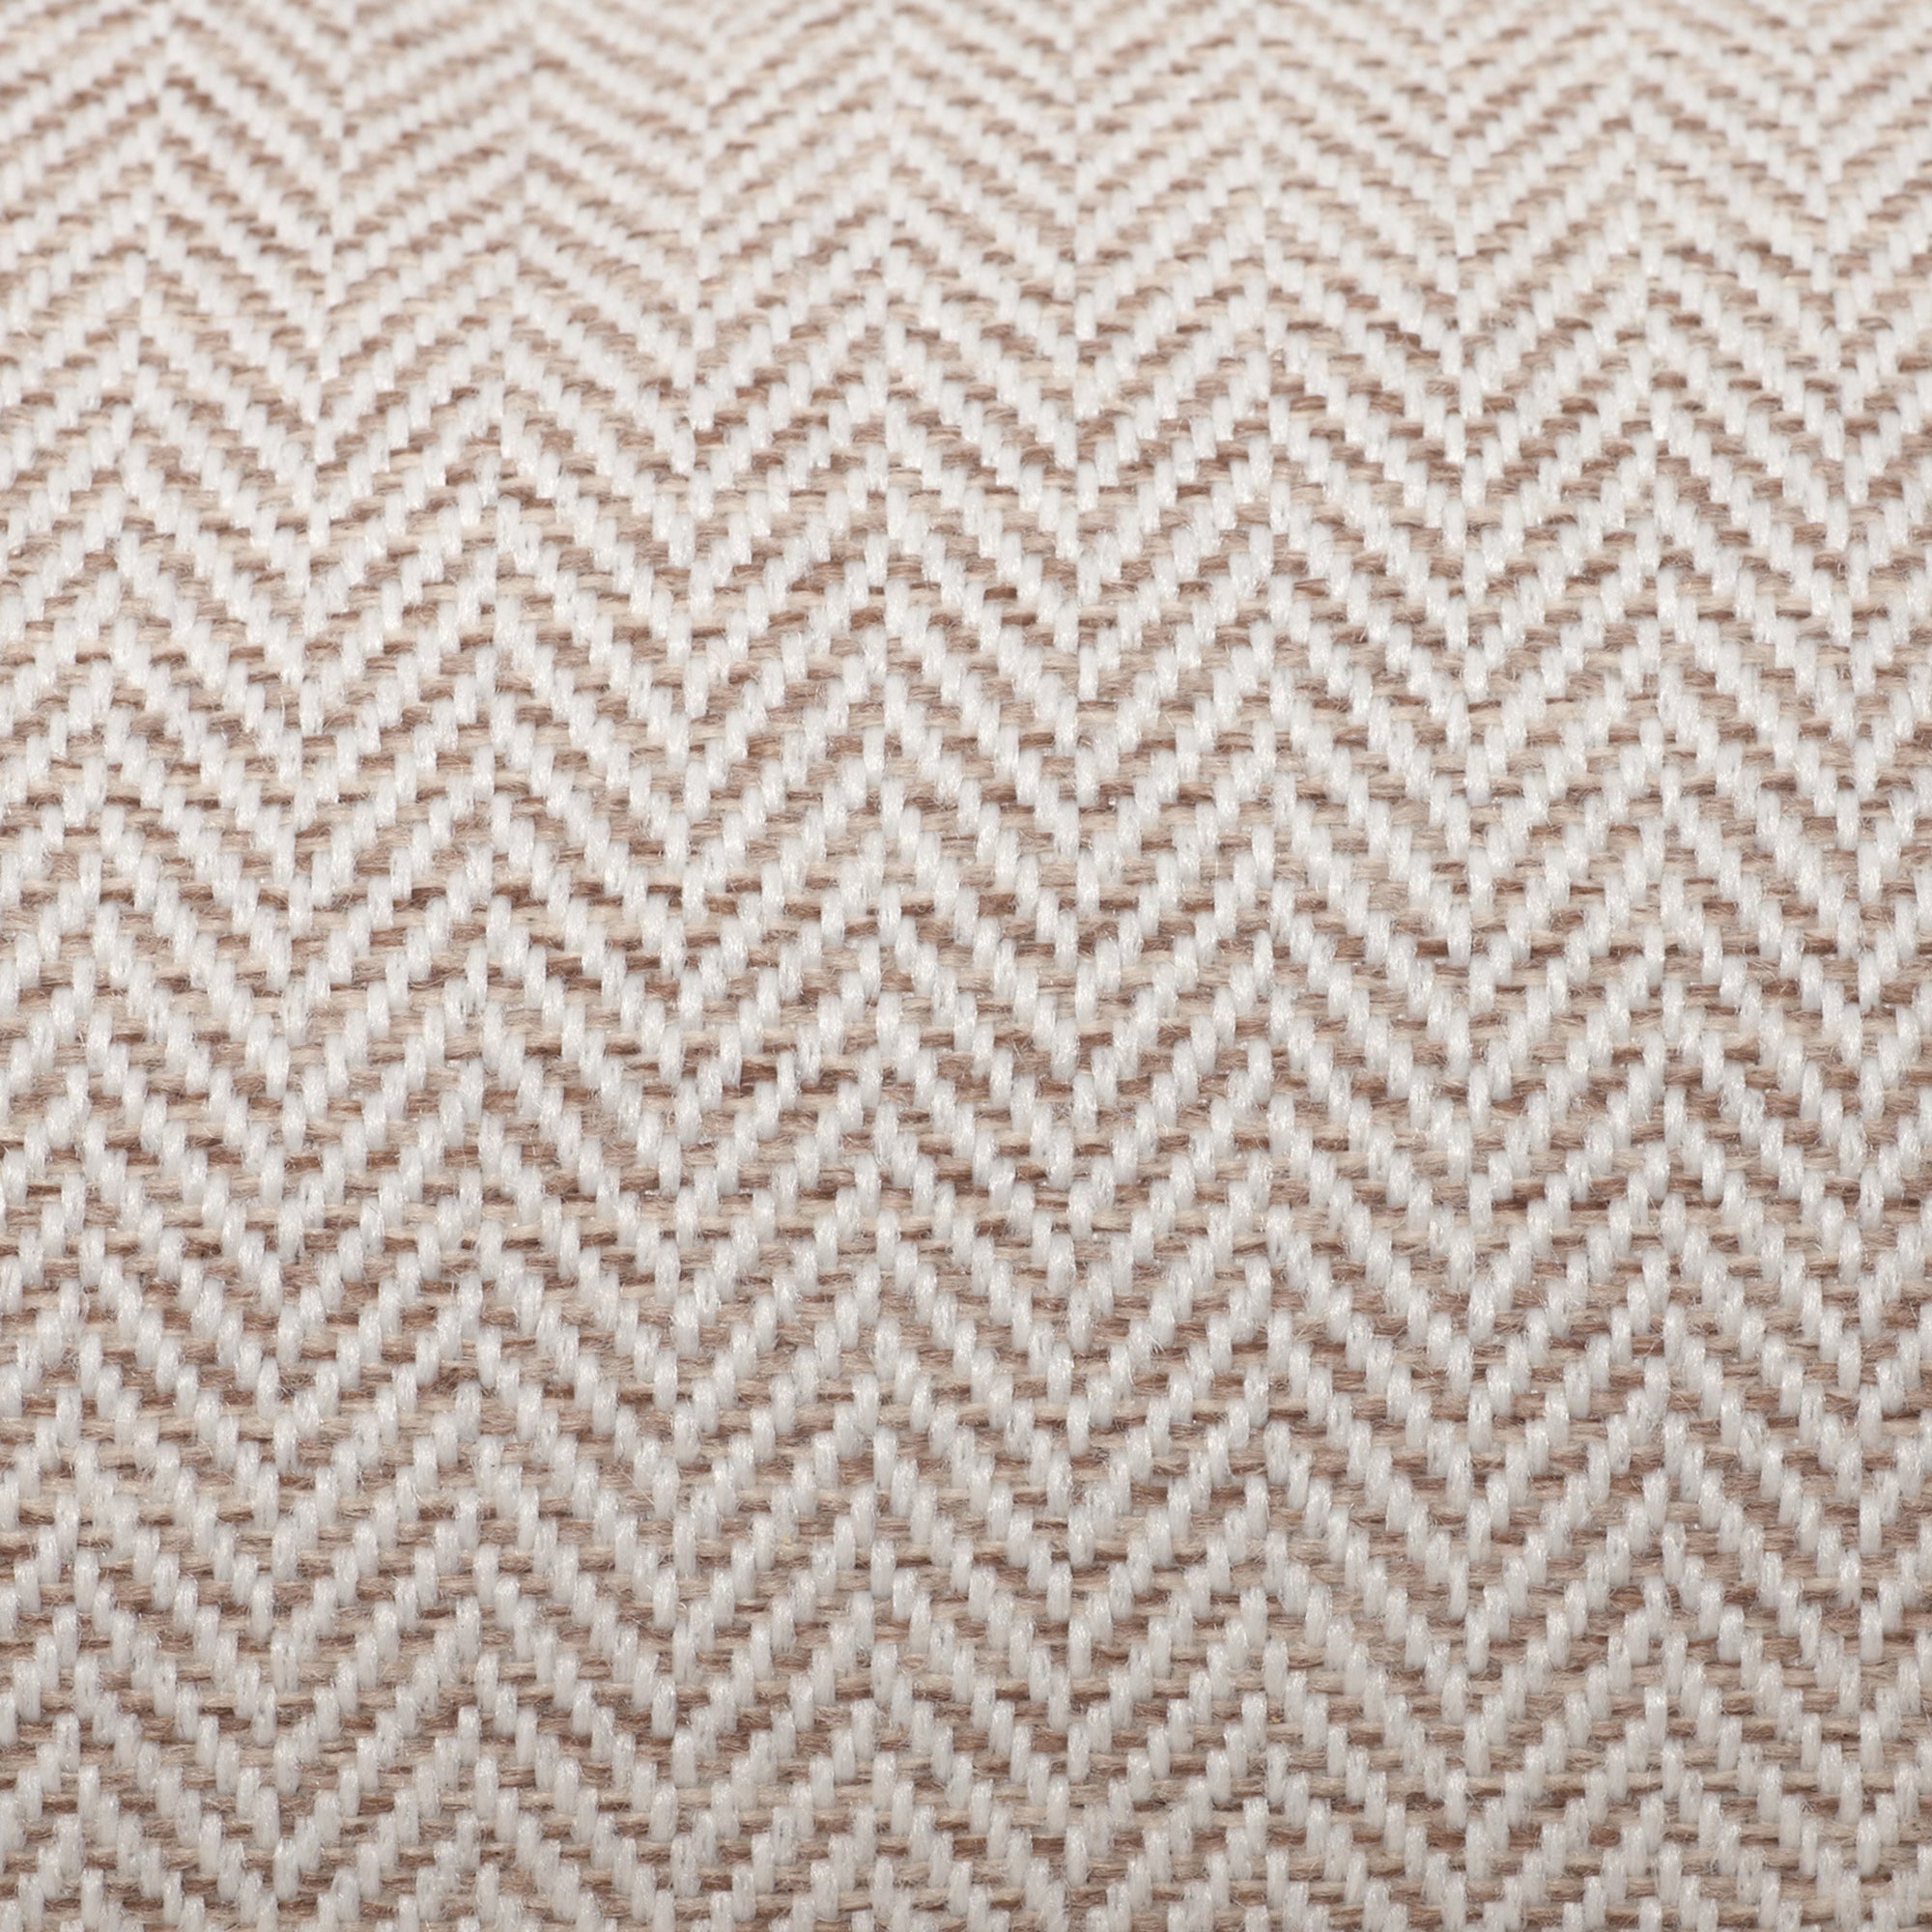 KONA CAVE® designer bolster dog bed in elegant cream herringbone fabric - detail.